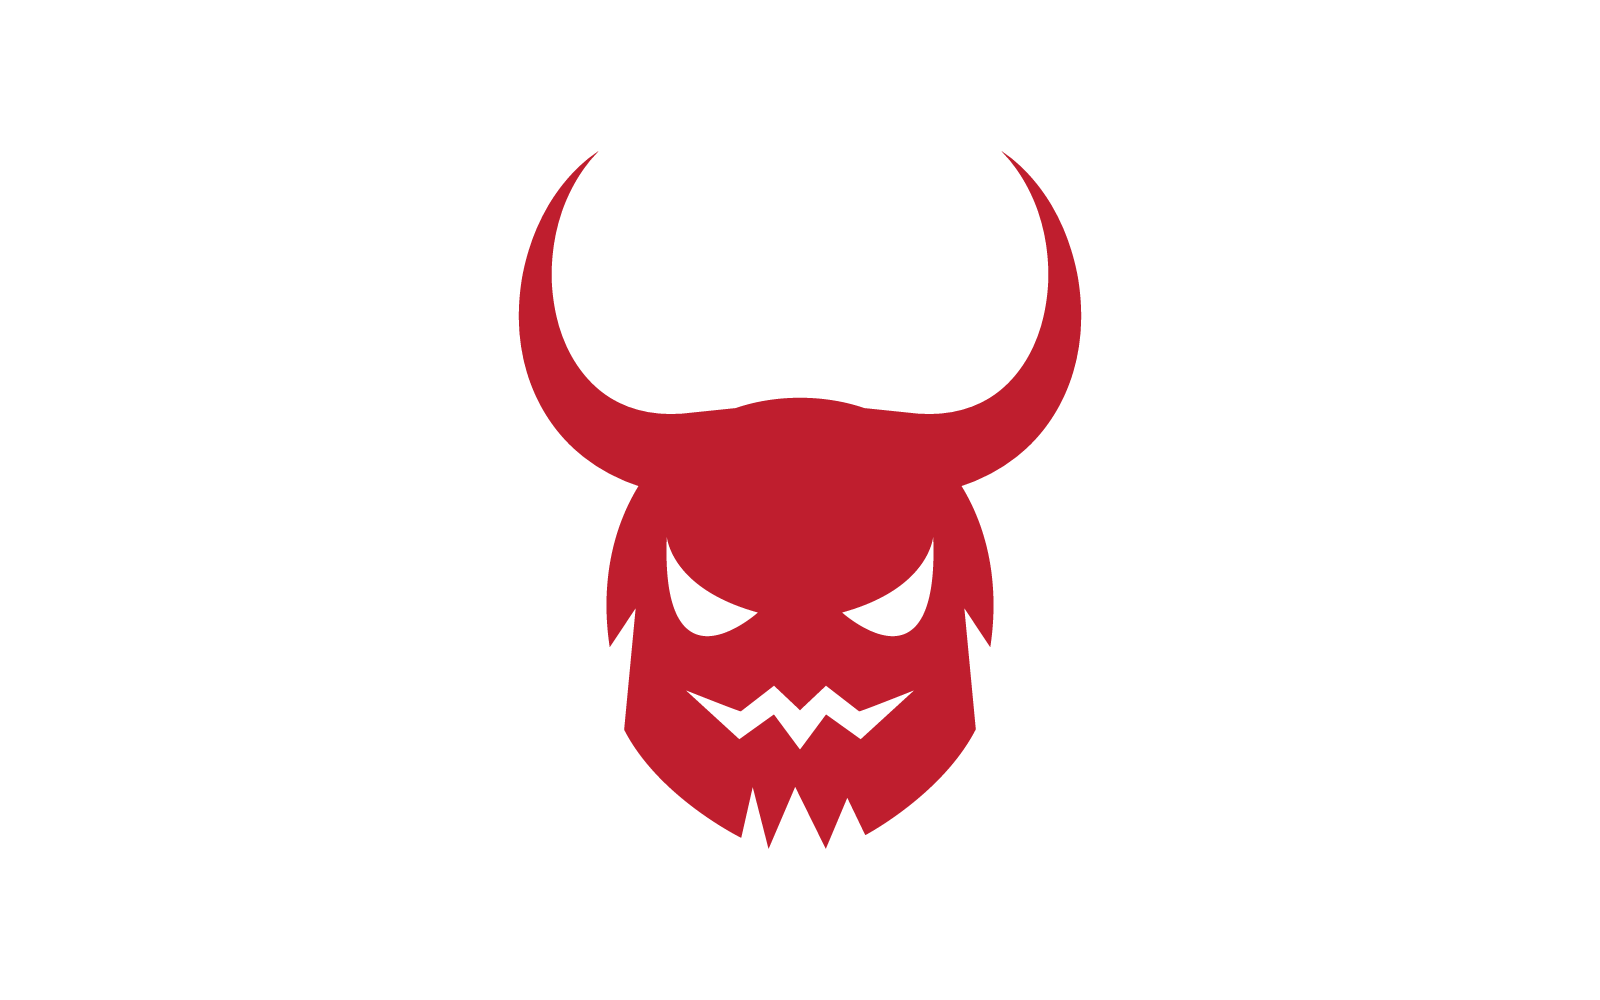 Шаблон векторного дизайна логотипа дьявола